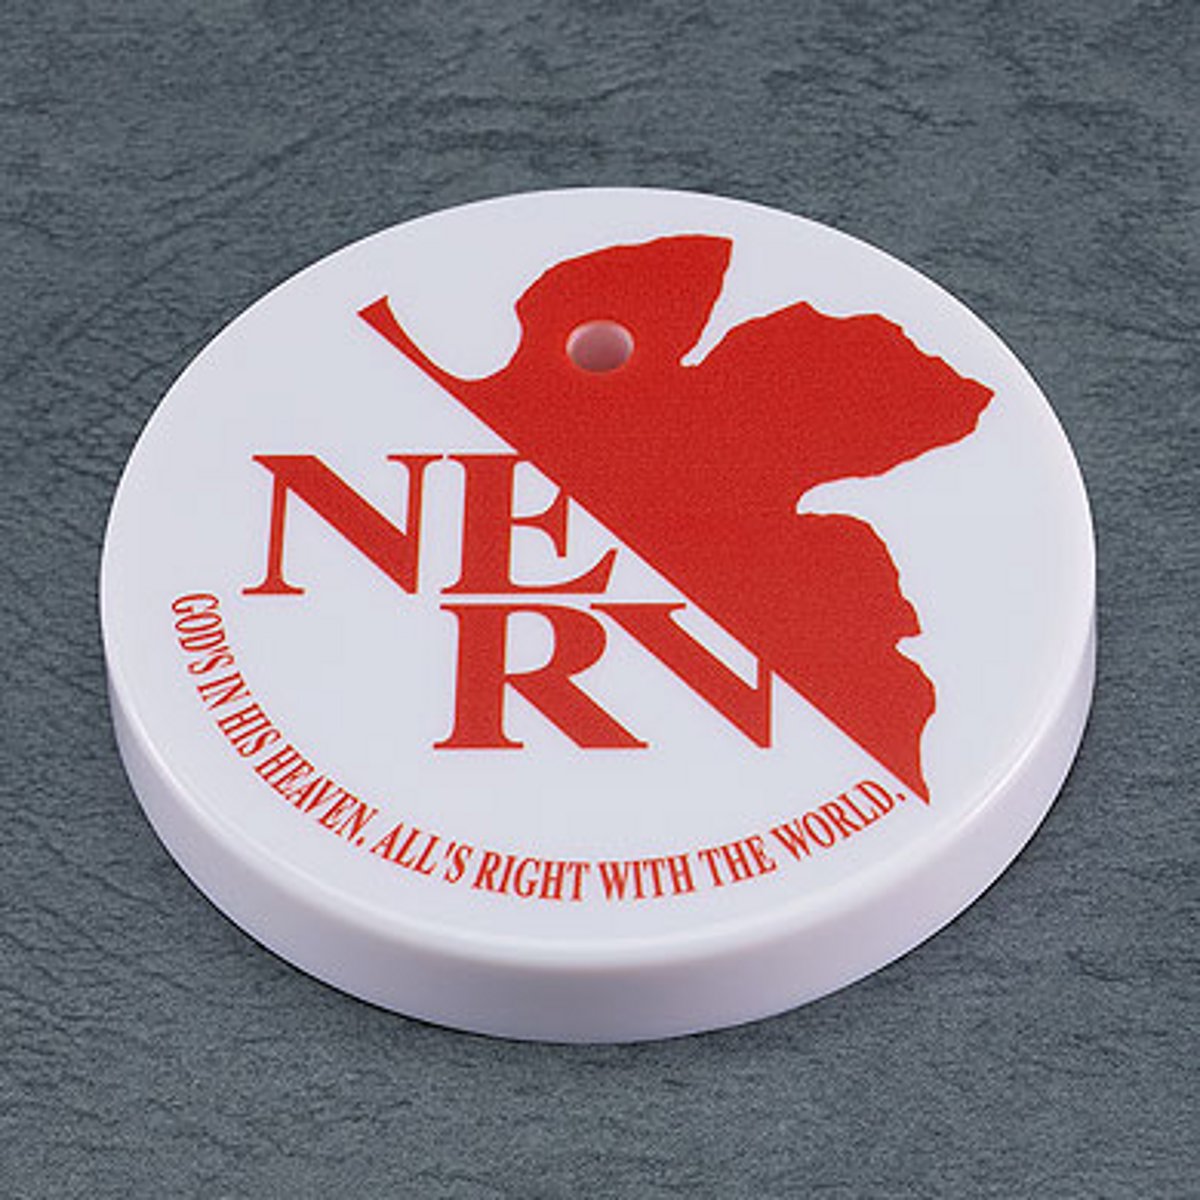 Gendo Ikari Nendoroid - exclusive NERV base